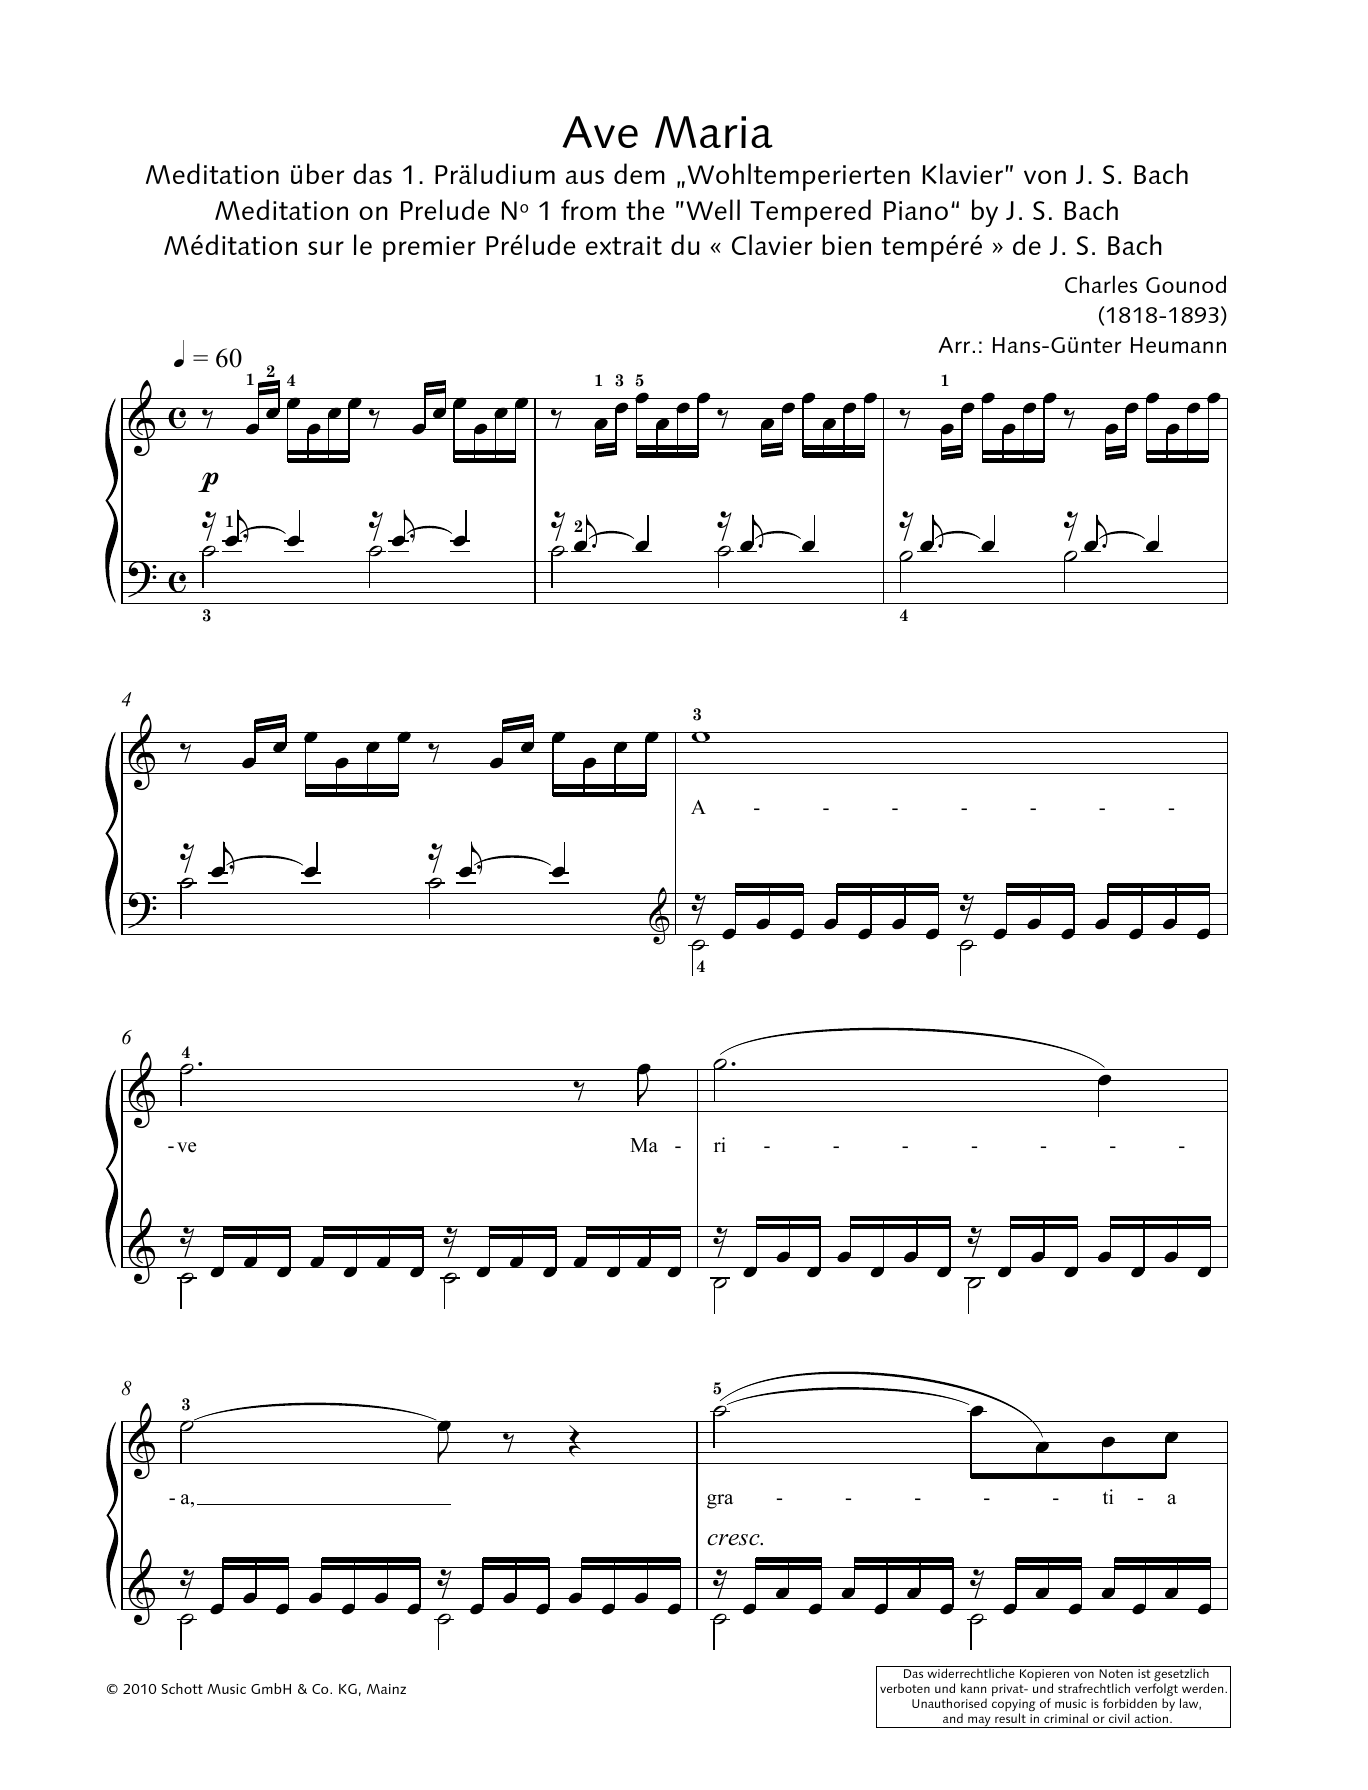 Download Charles Gounod Ave Maria Sheet Music